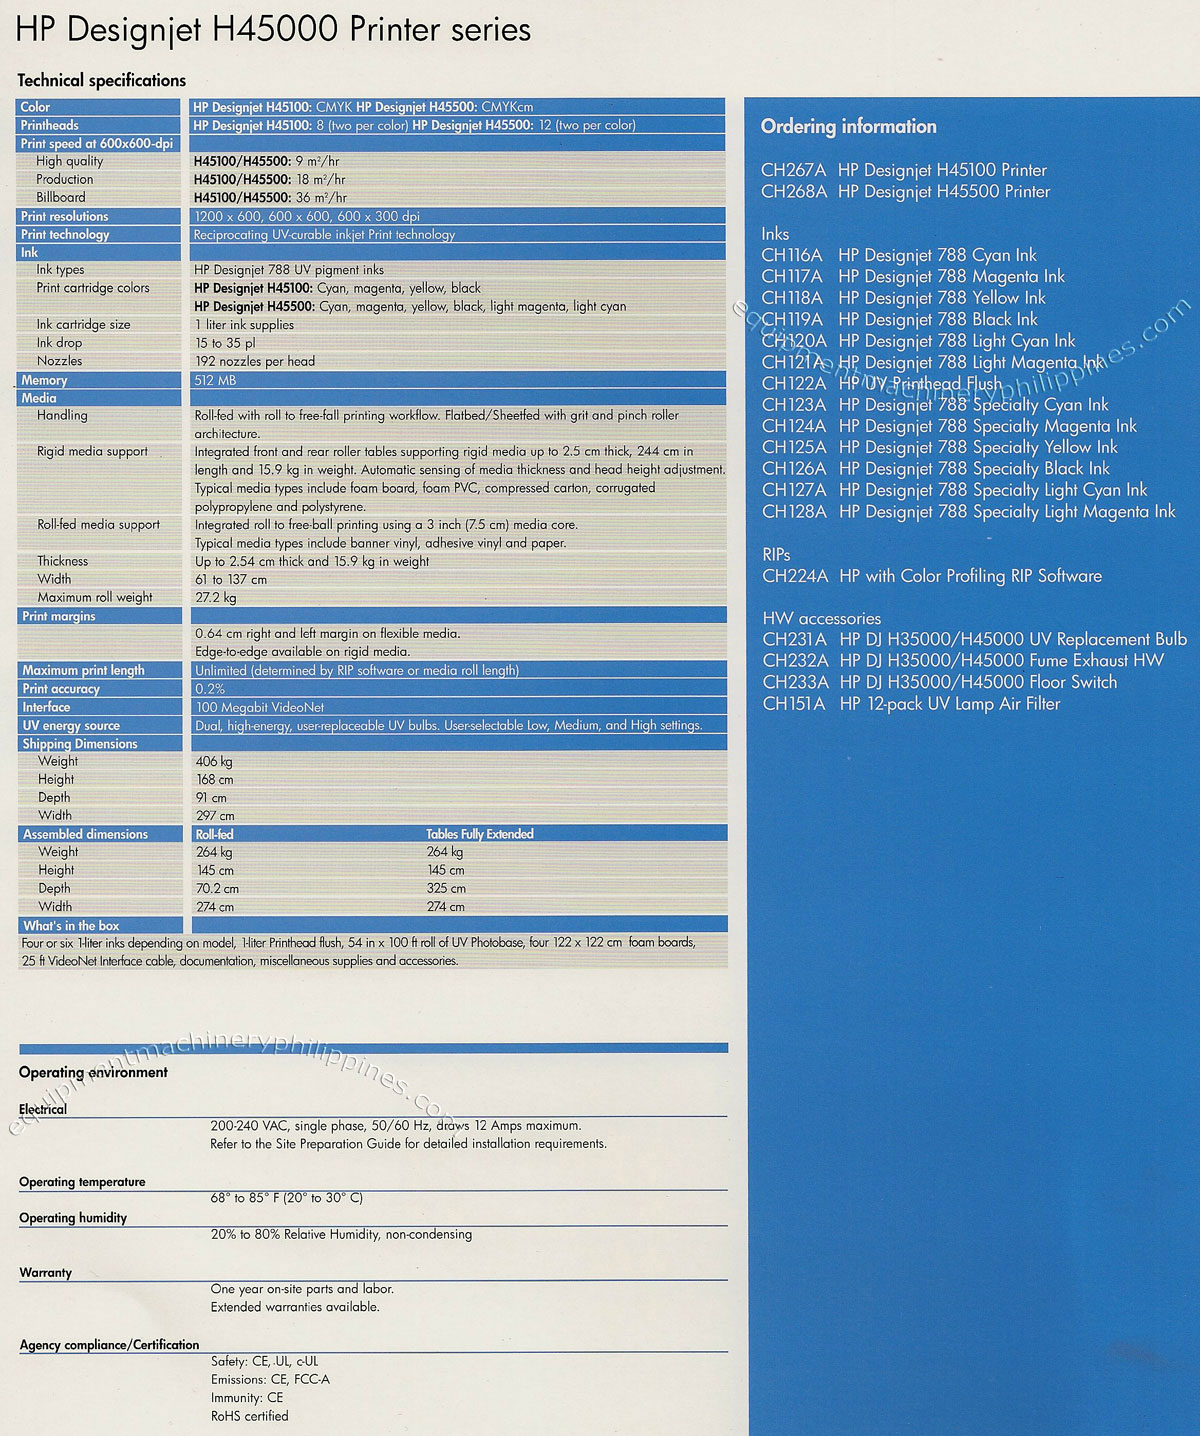 HP Designjet H45000 Printer Series Specifications